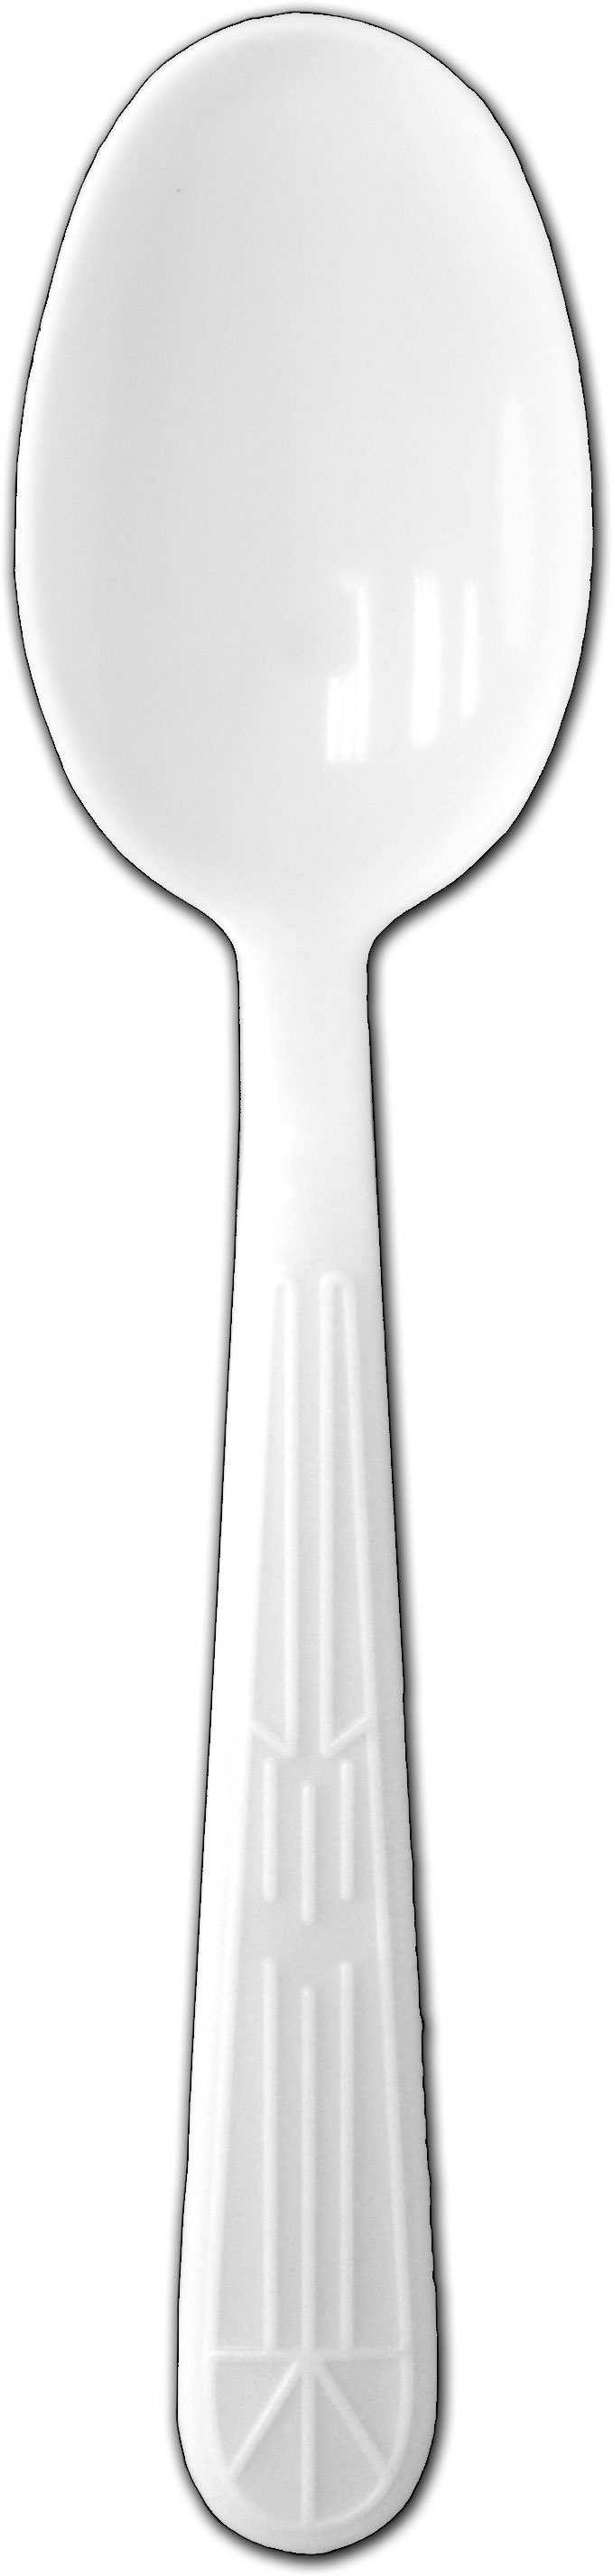 HEAVY POLYPROPYLENE TEASPOON WHITE 1000 (P2505W)